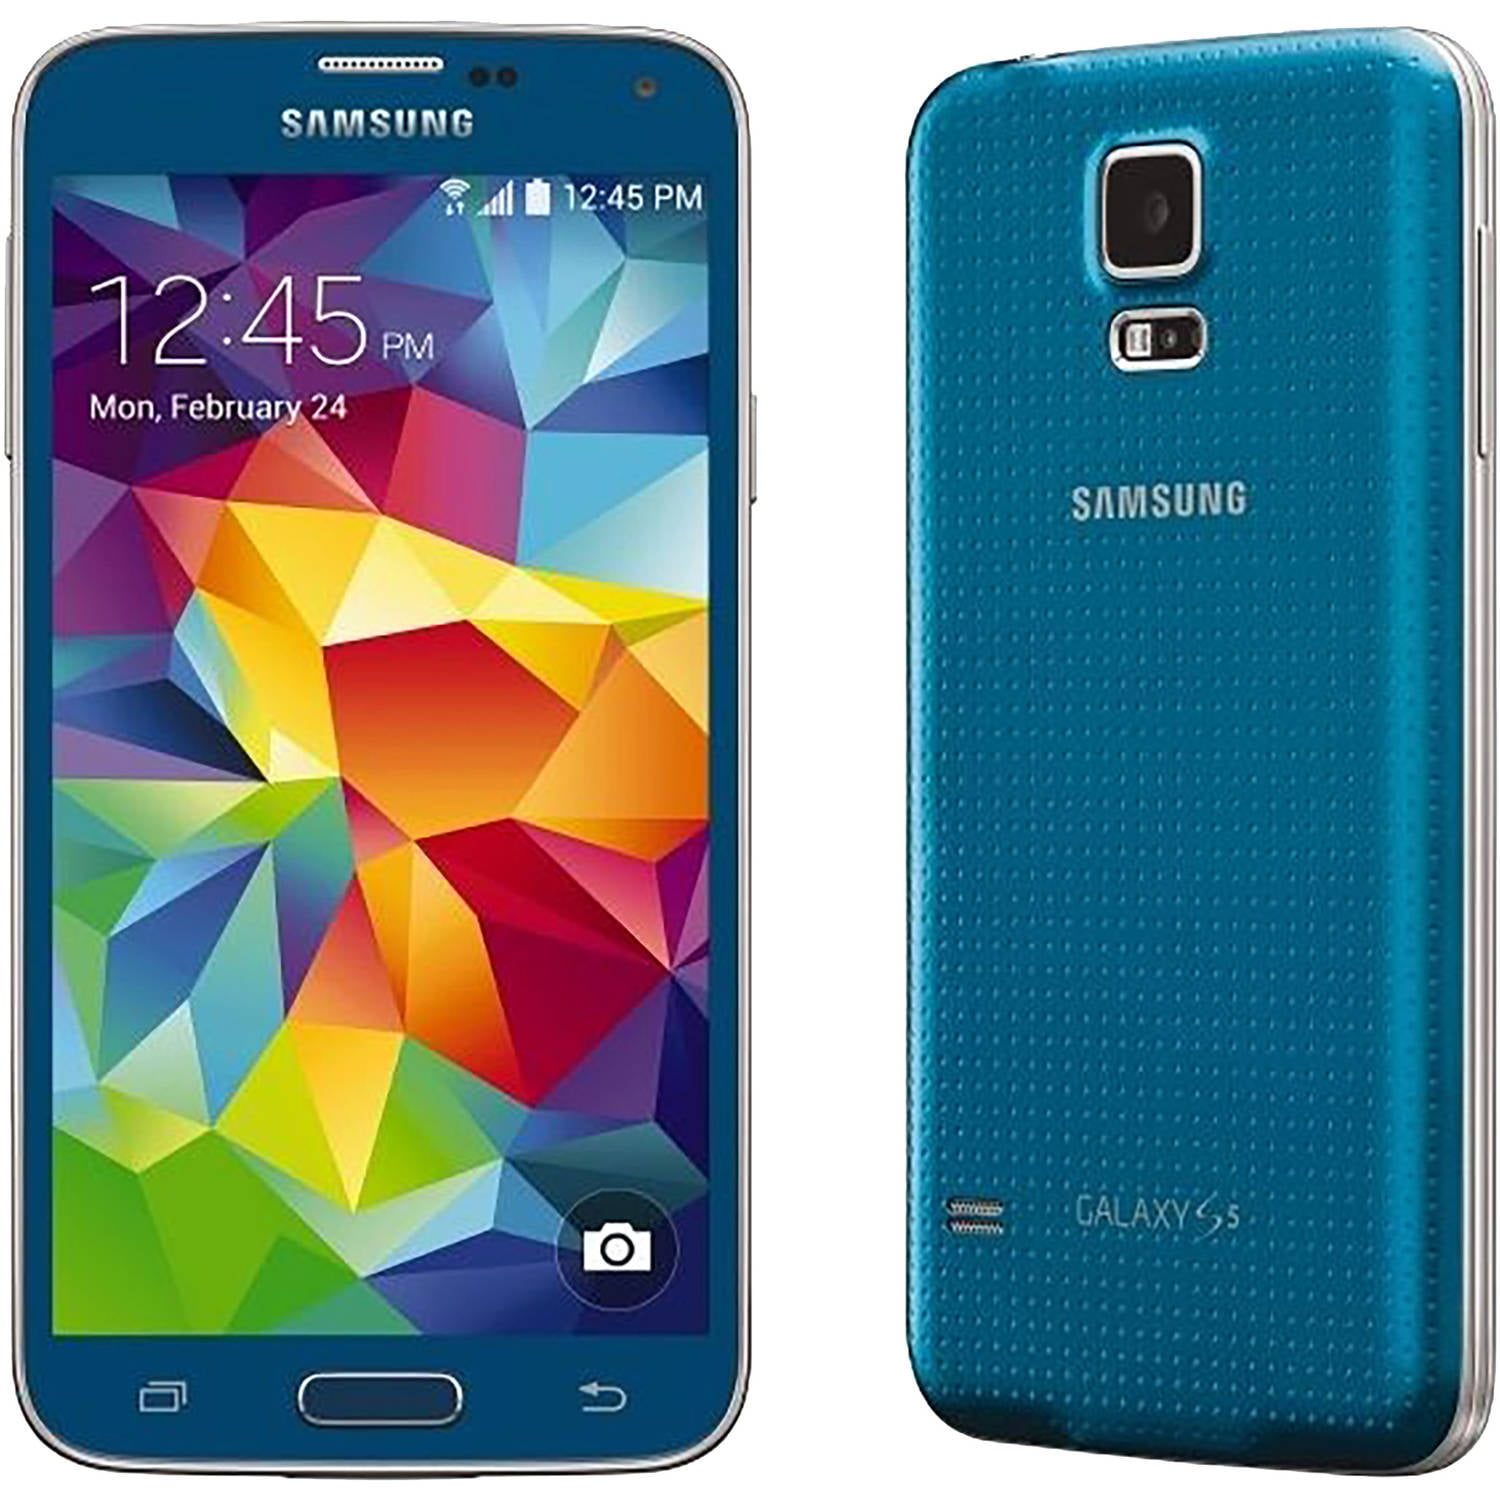 Купить галакси s5. Samsung Galaxy s5 SM-g900f 16gb. Самсугг гелакси s5 синий. Самсунг галакси а5. Samsung SM g900fd.